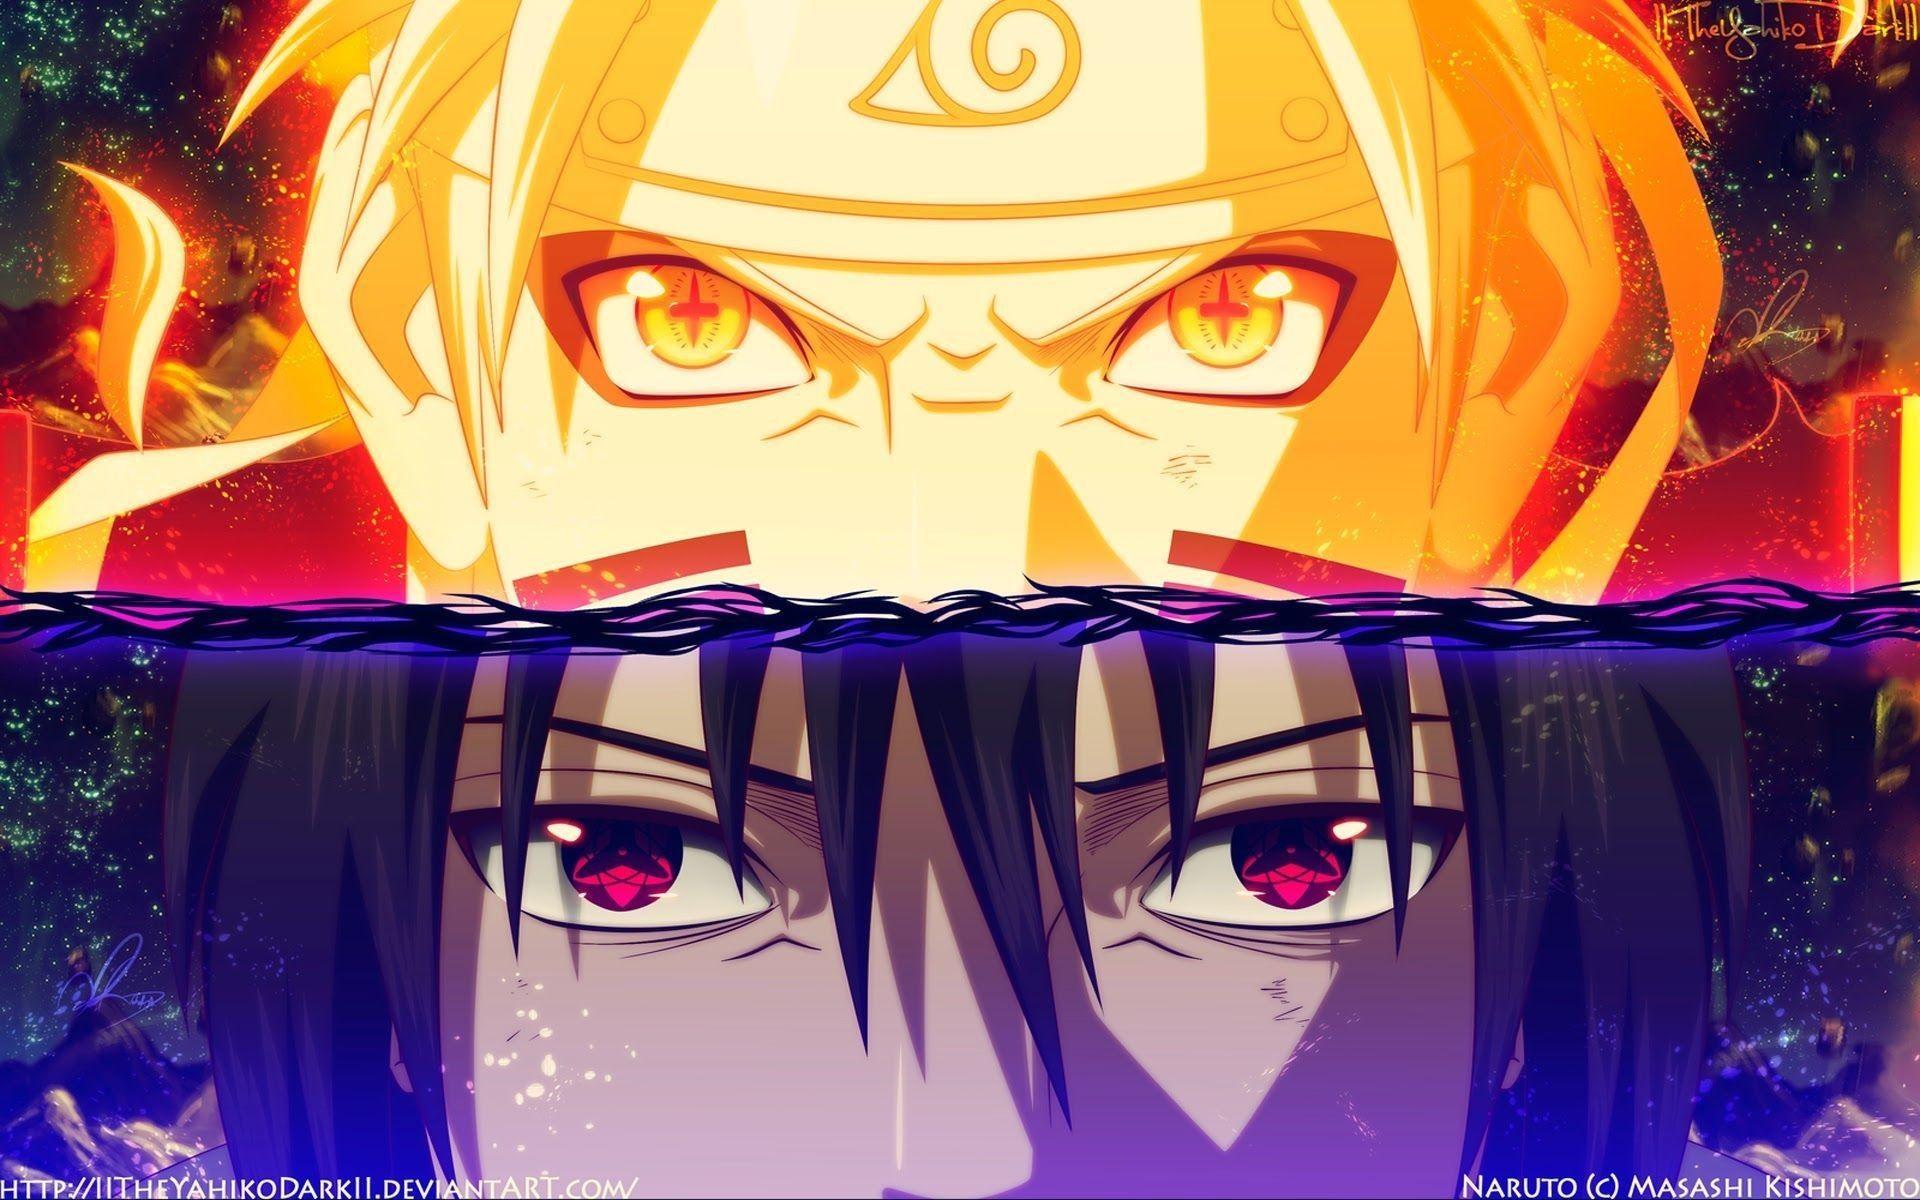 Naruto and Sasuke Wallpaper 67 pictures